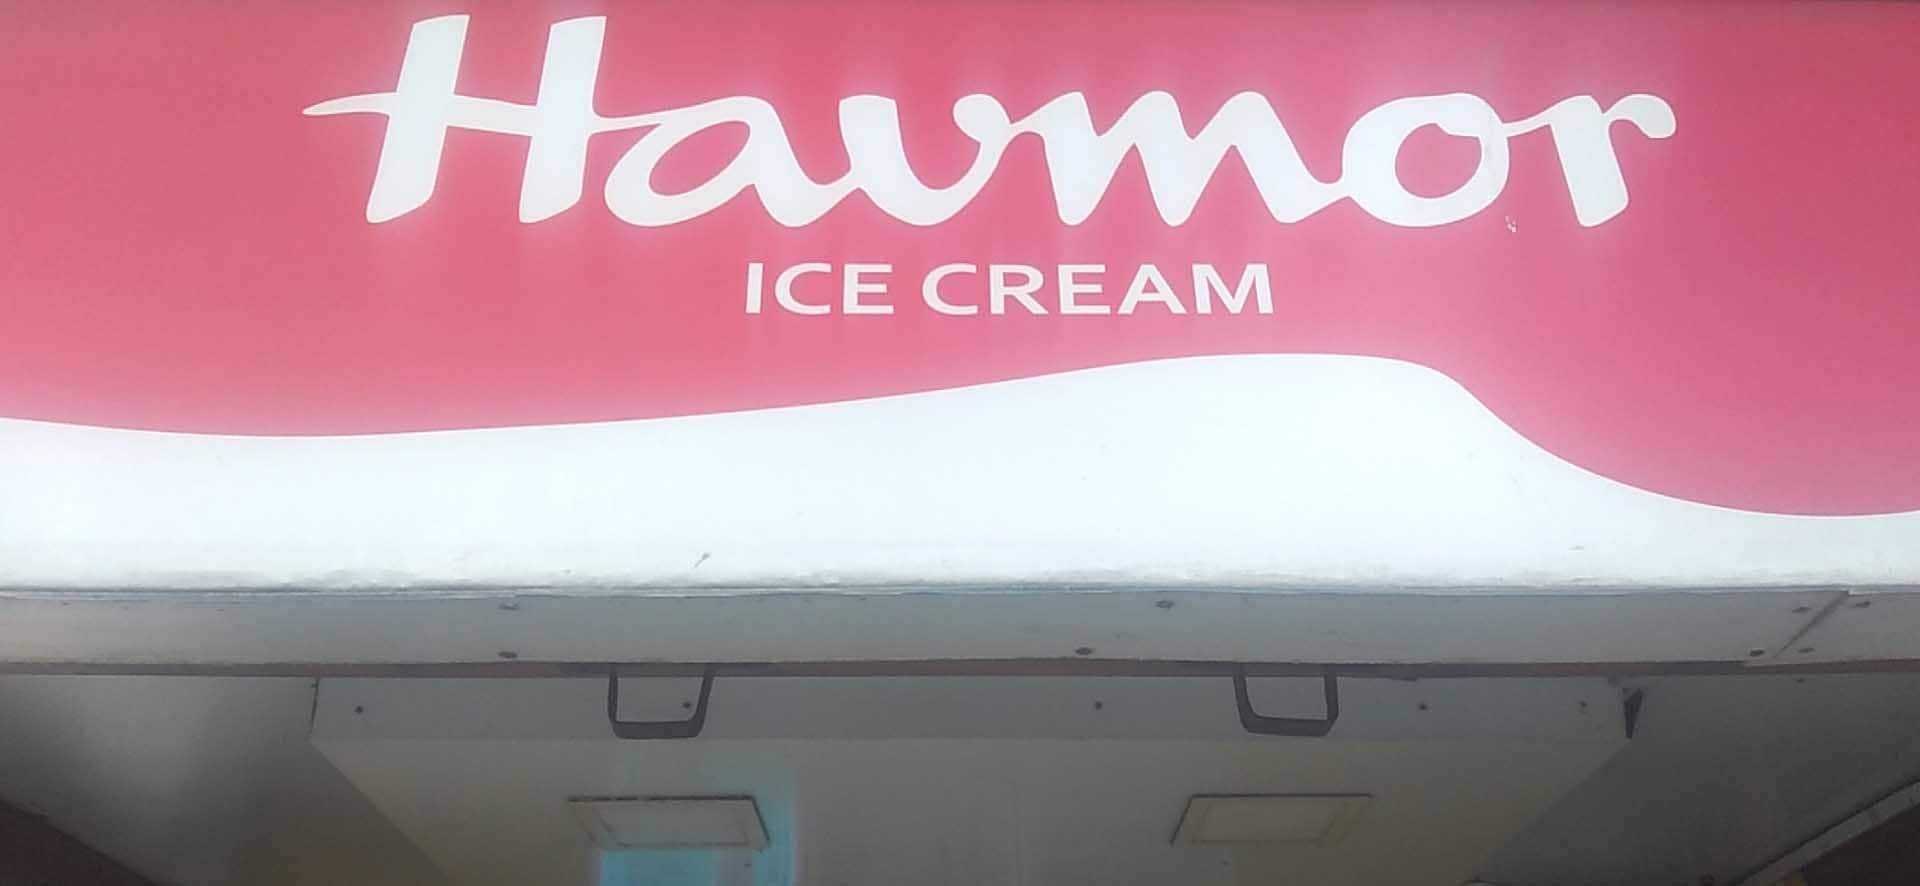 Havmor Ice Cream ropes in Hardik Pandya as brand ambassador, Marketing &  Advertising News, ET BrandEquity